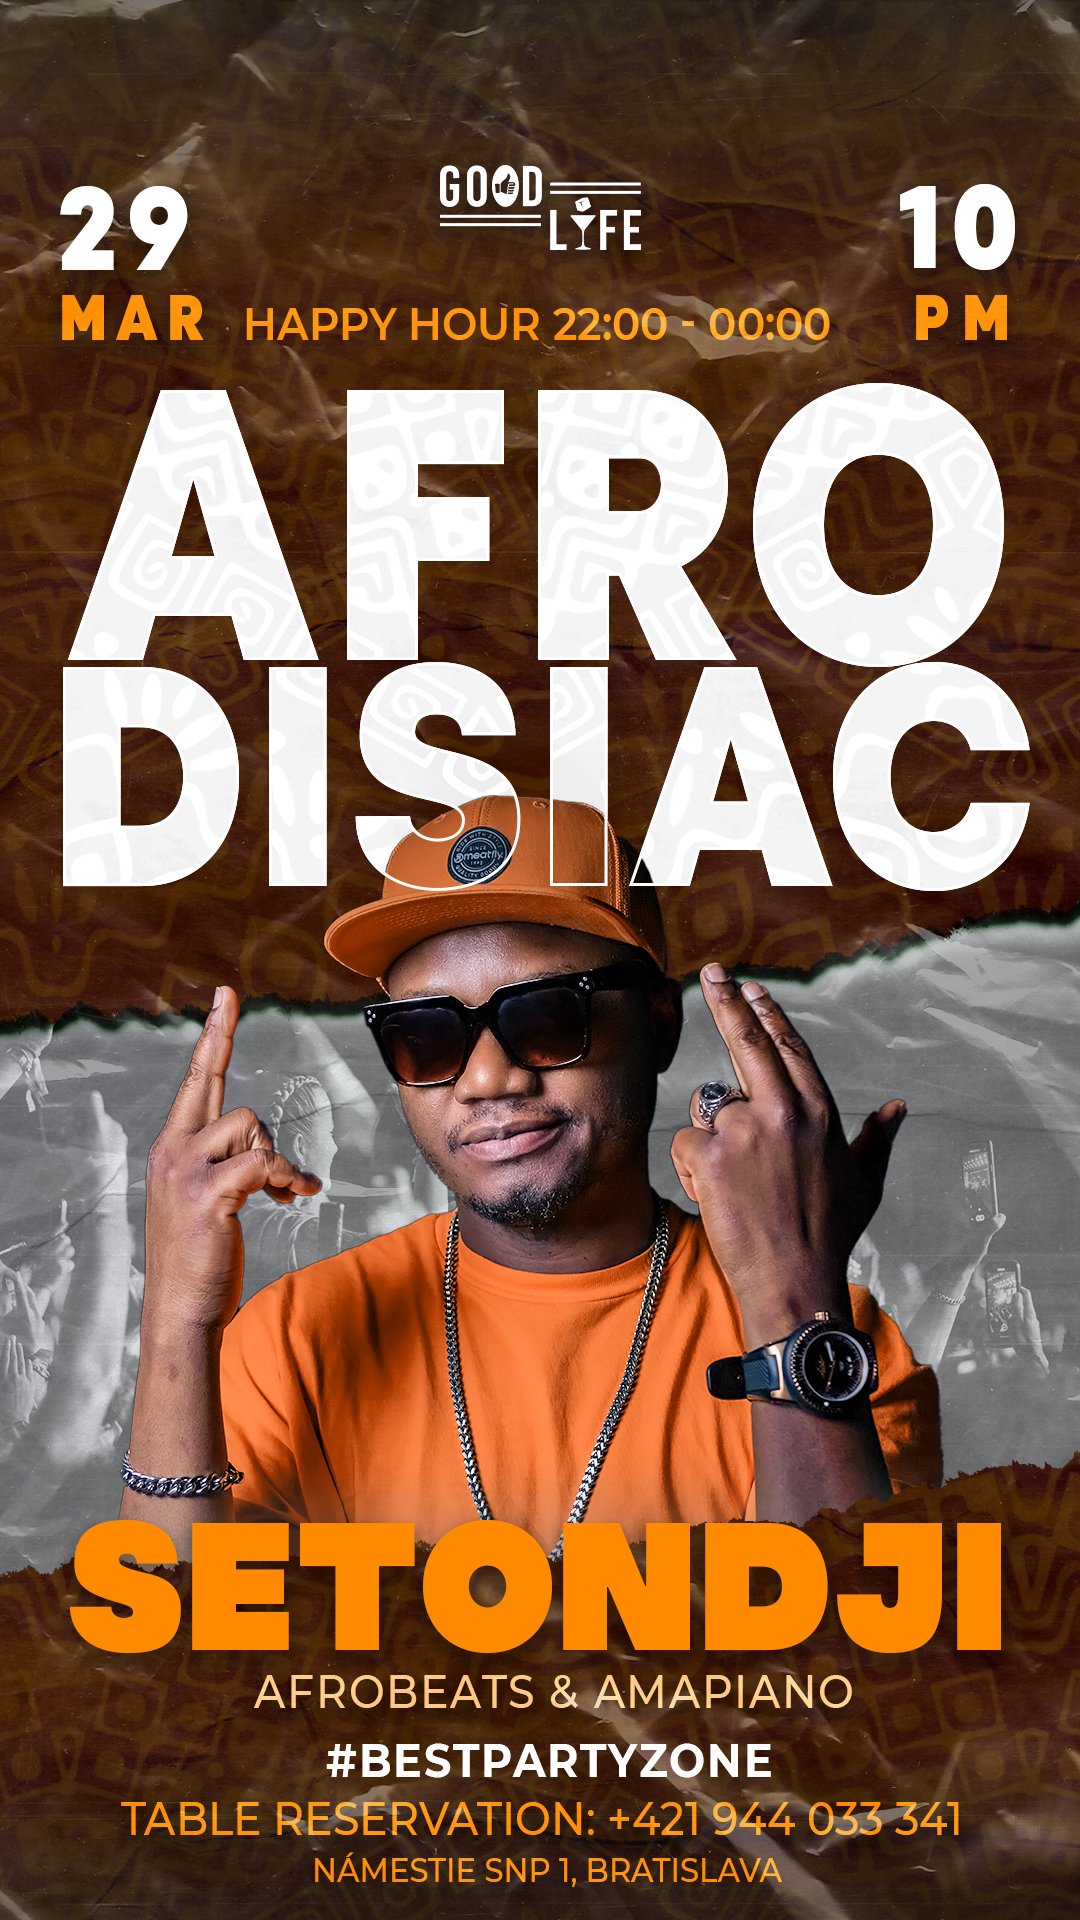 Afrodisiac @DJSetondji